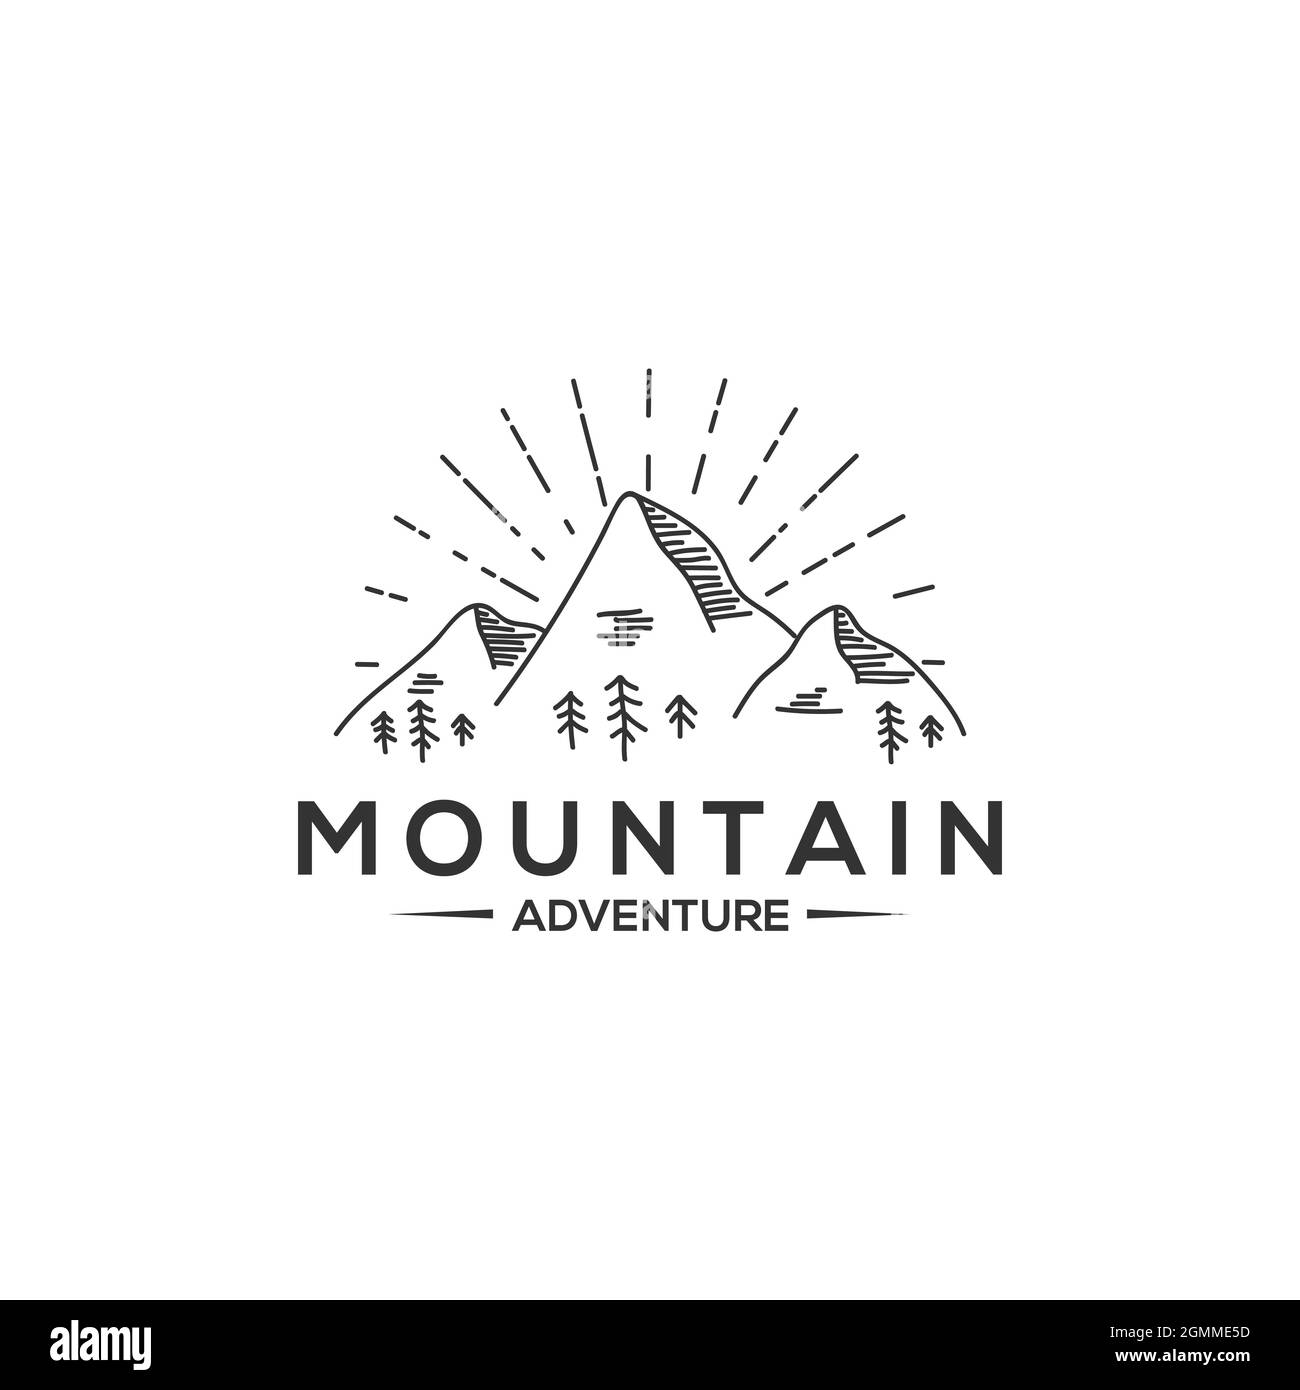 Outline mountain adventure logo design, outdoor adventure Vector graphic illustrations Stock Vector